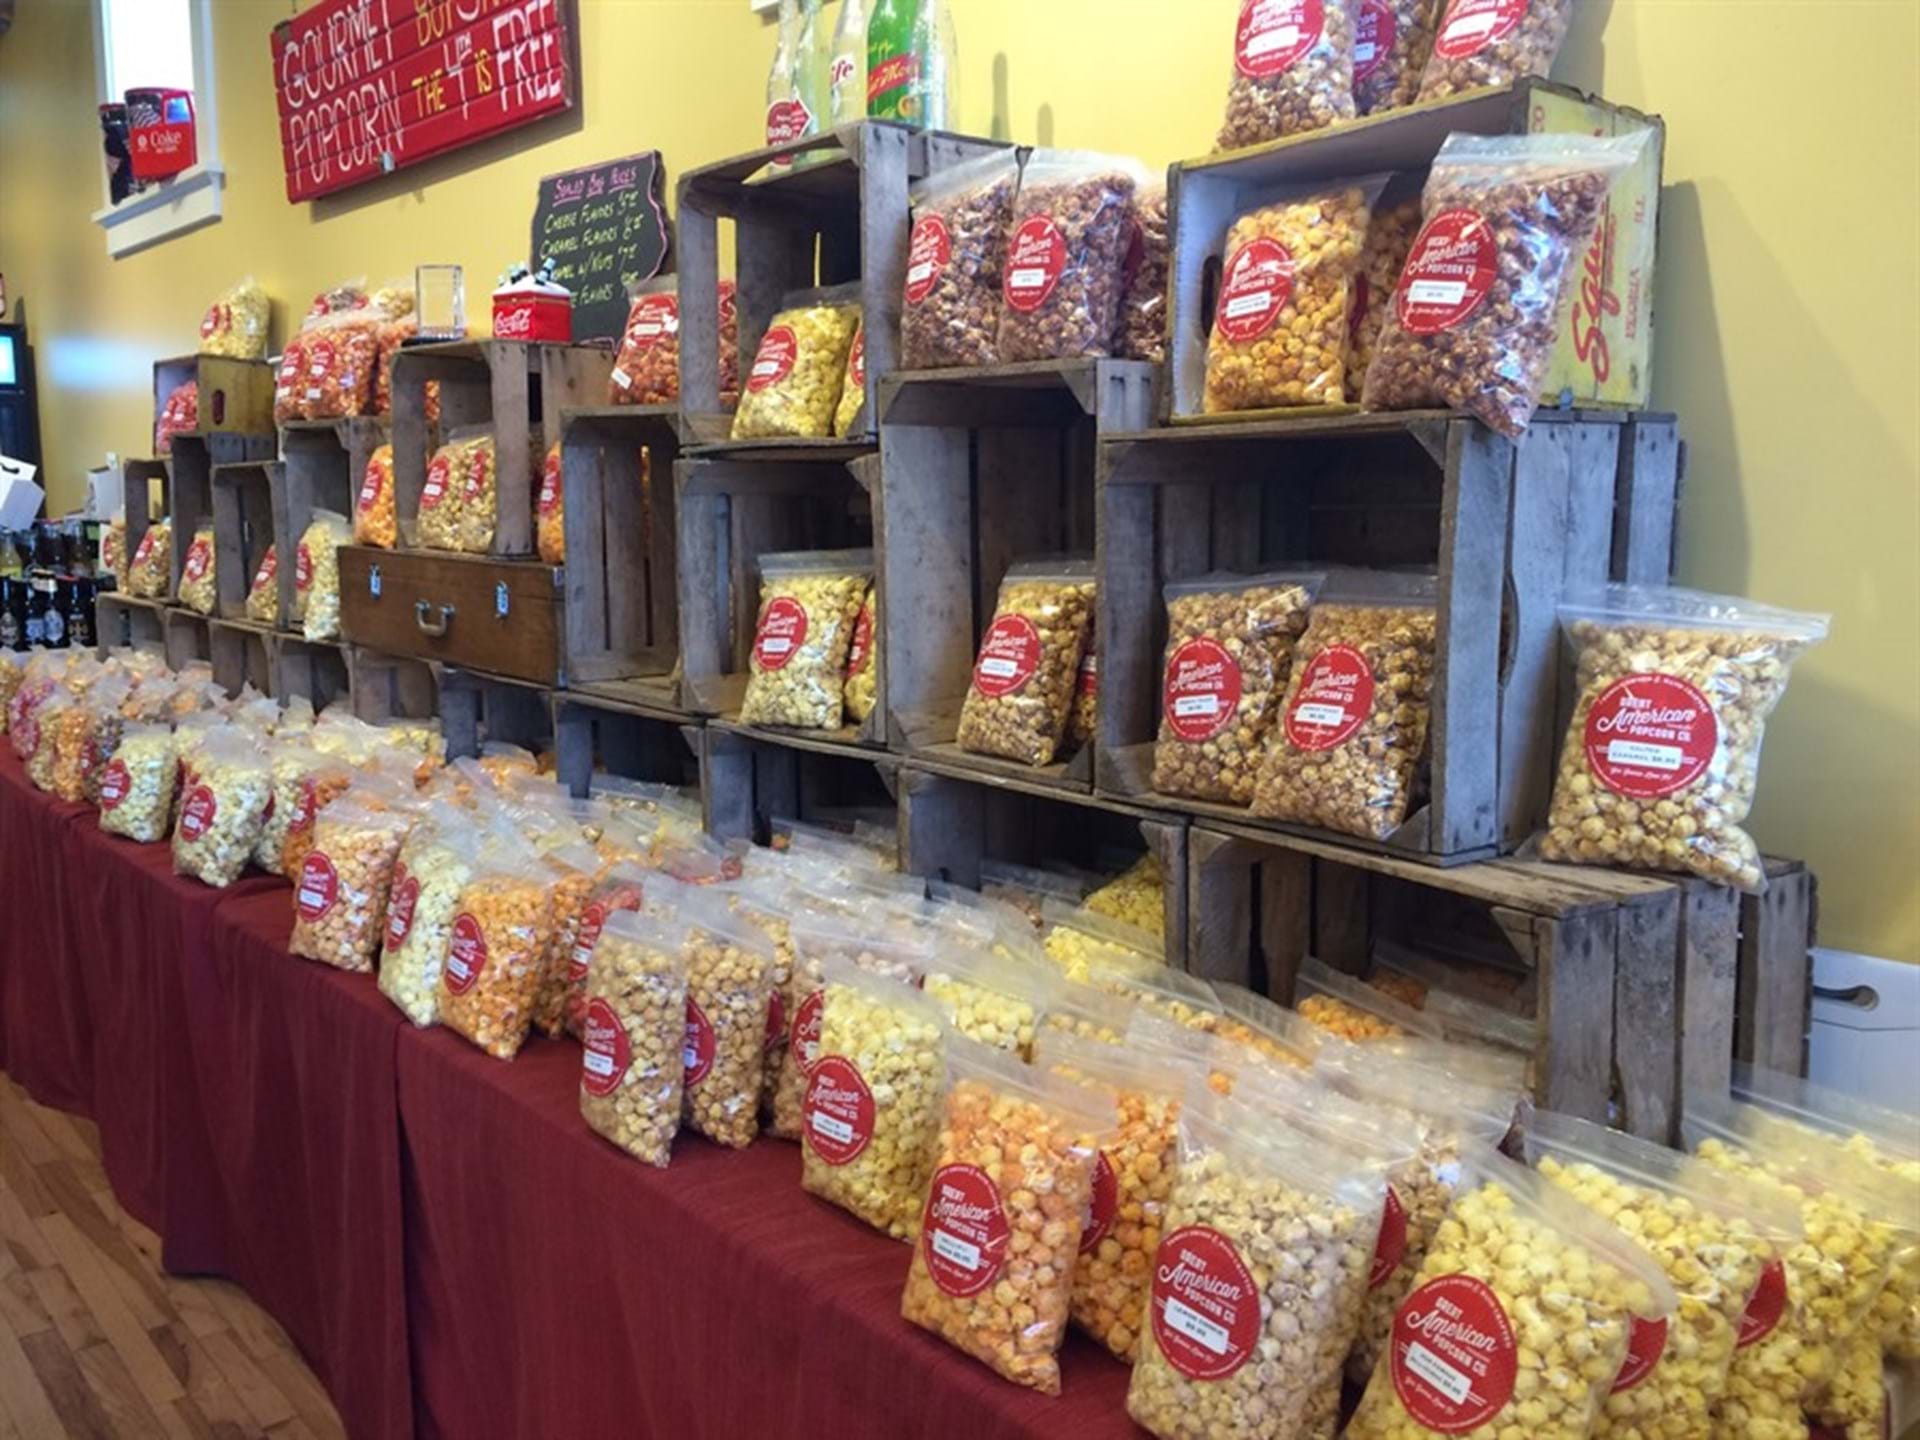 Popcorn wall - 50+ flavors